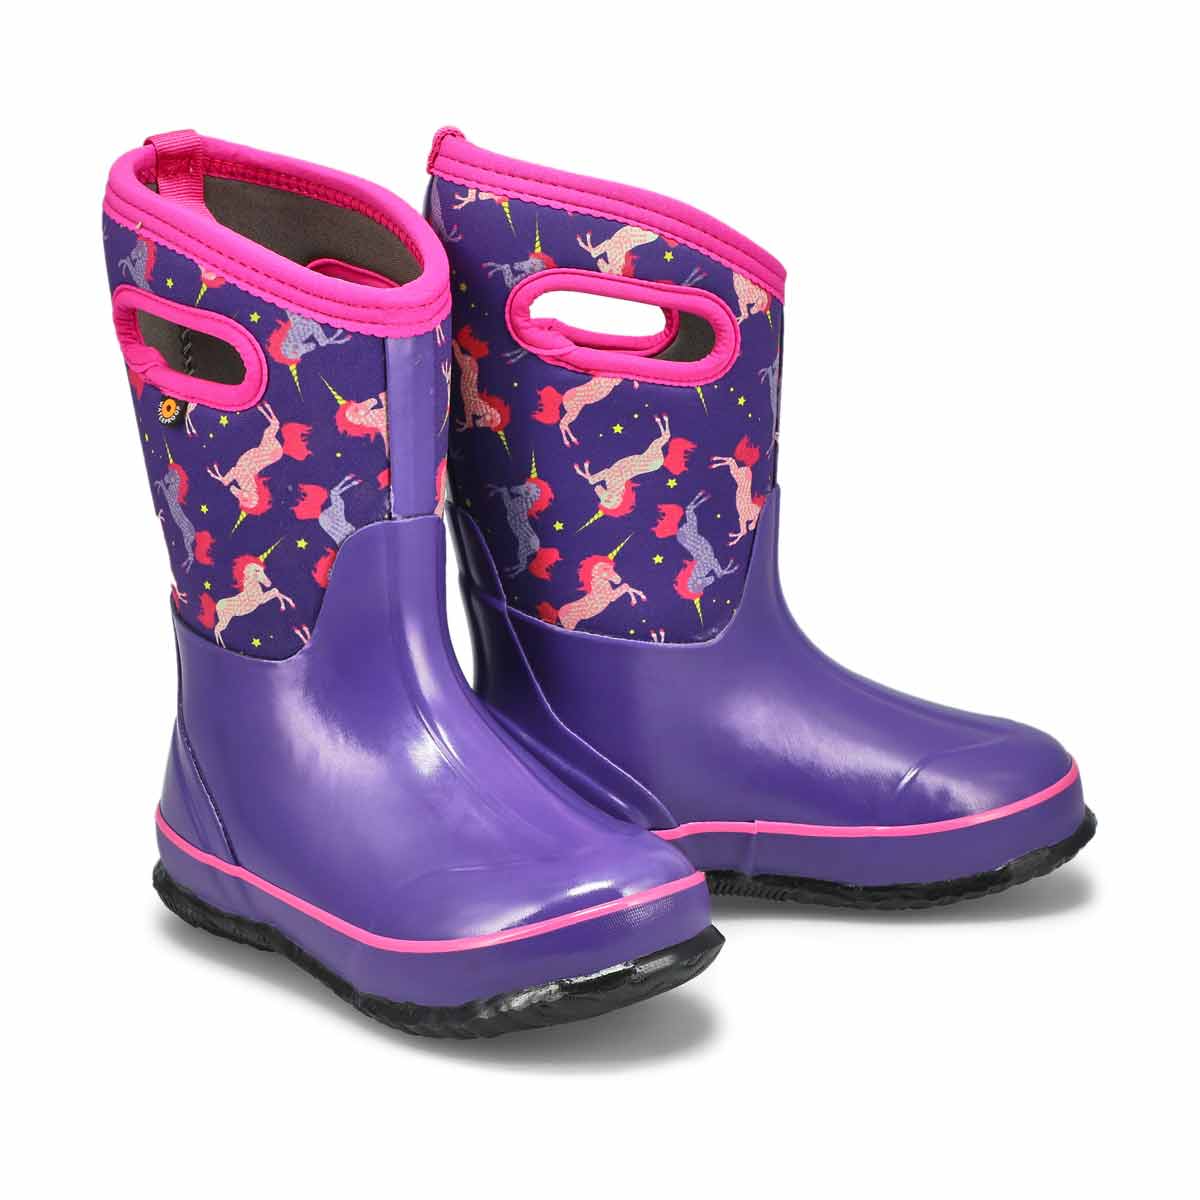 Bogs Girls Classic Unicorns  Waterproof Winter Boot  eBay